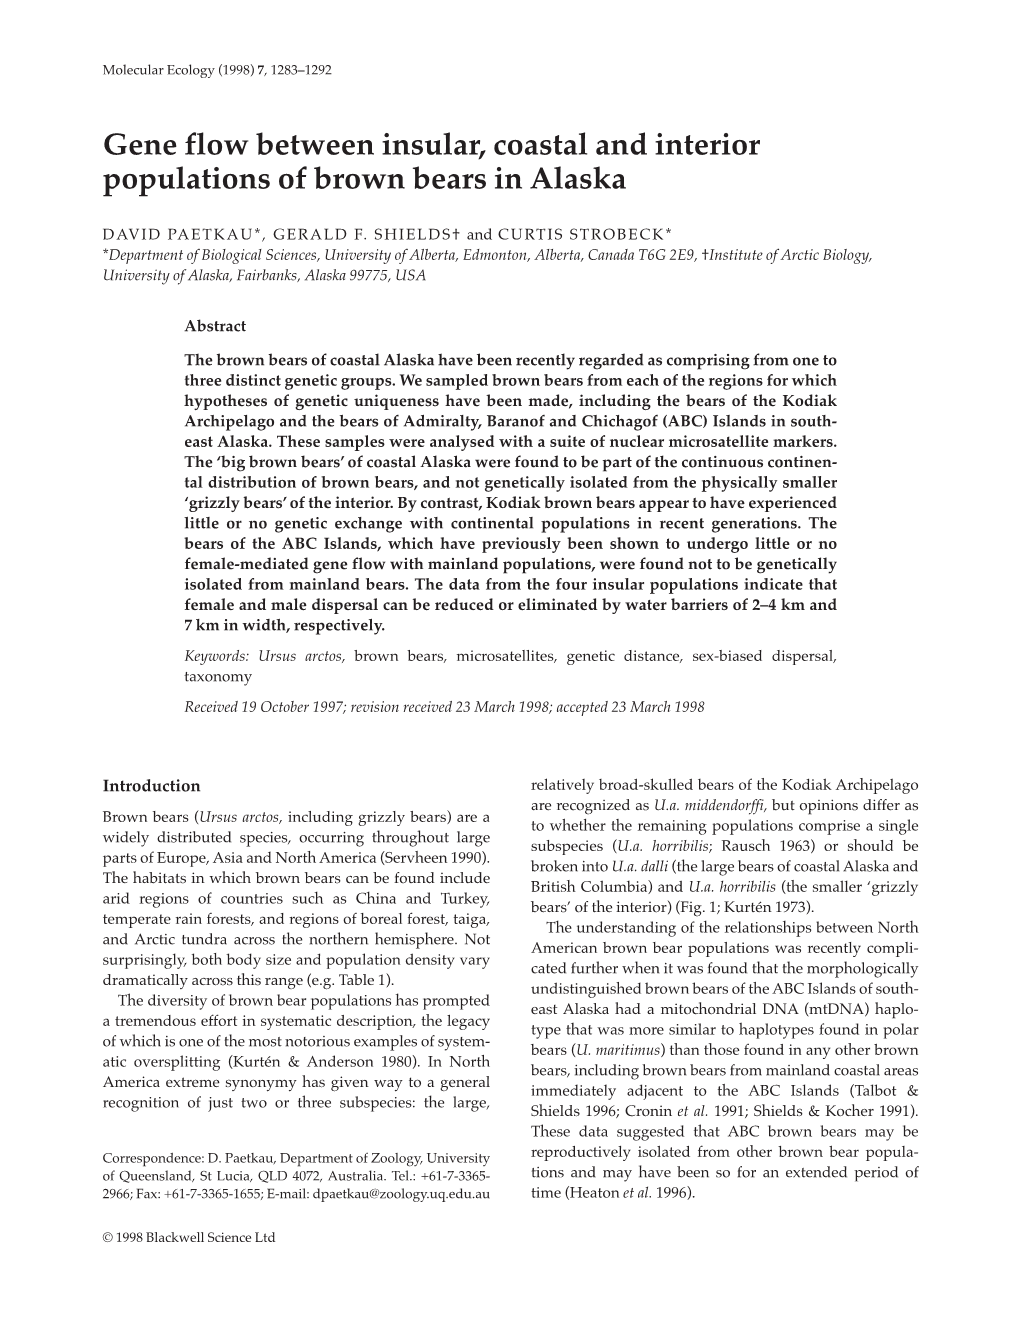 Gene Flow Between Insular, Coastal and Interior Populations of Brown Bears in Alaska